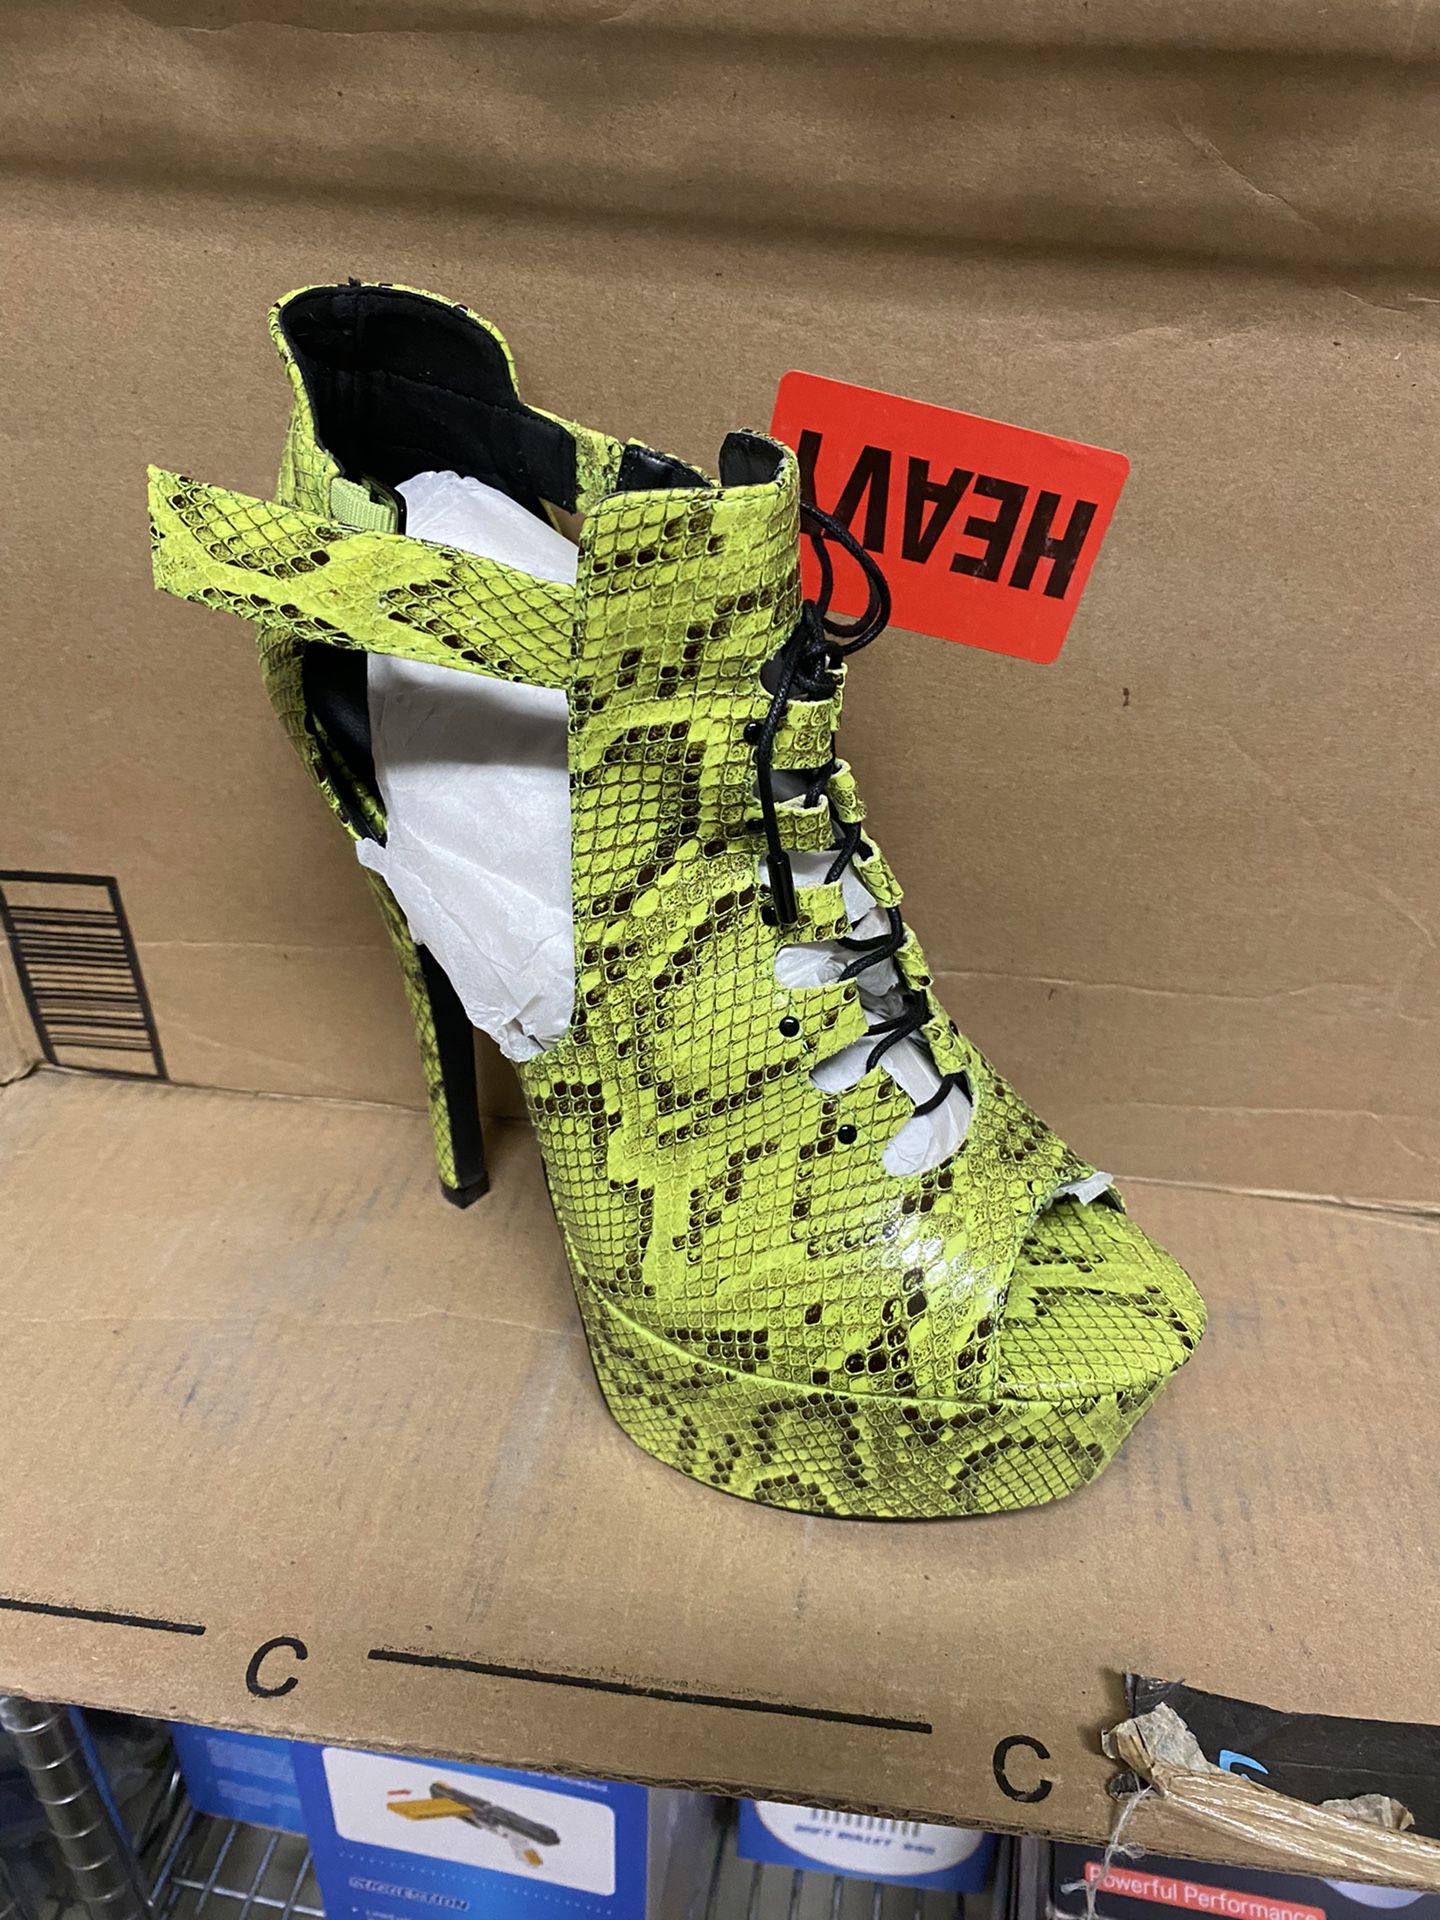 Neon Green snake print Dollhouse heels